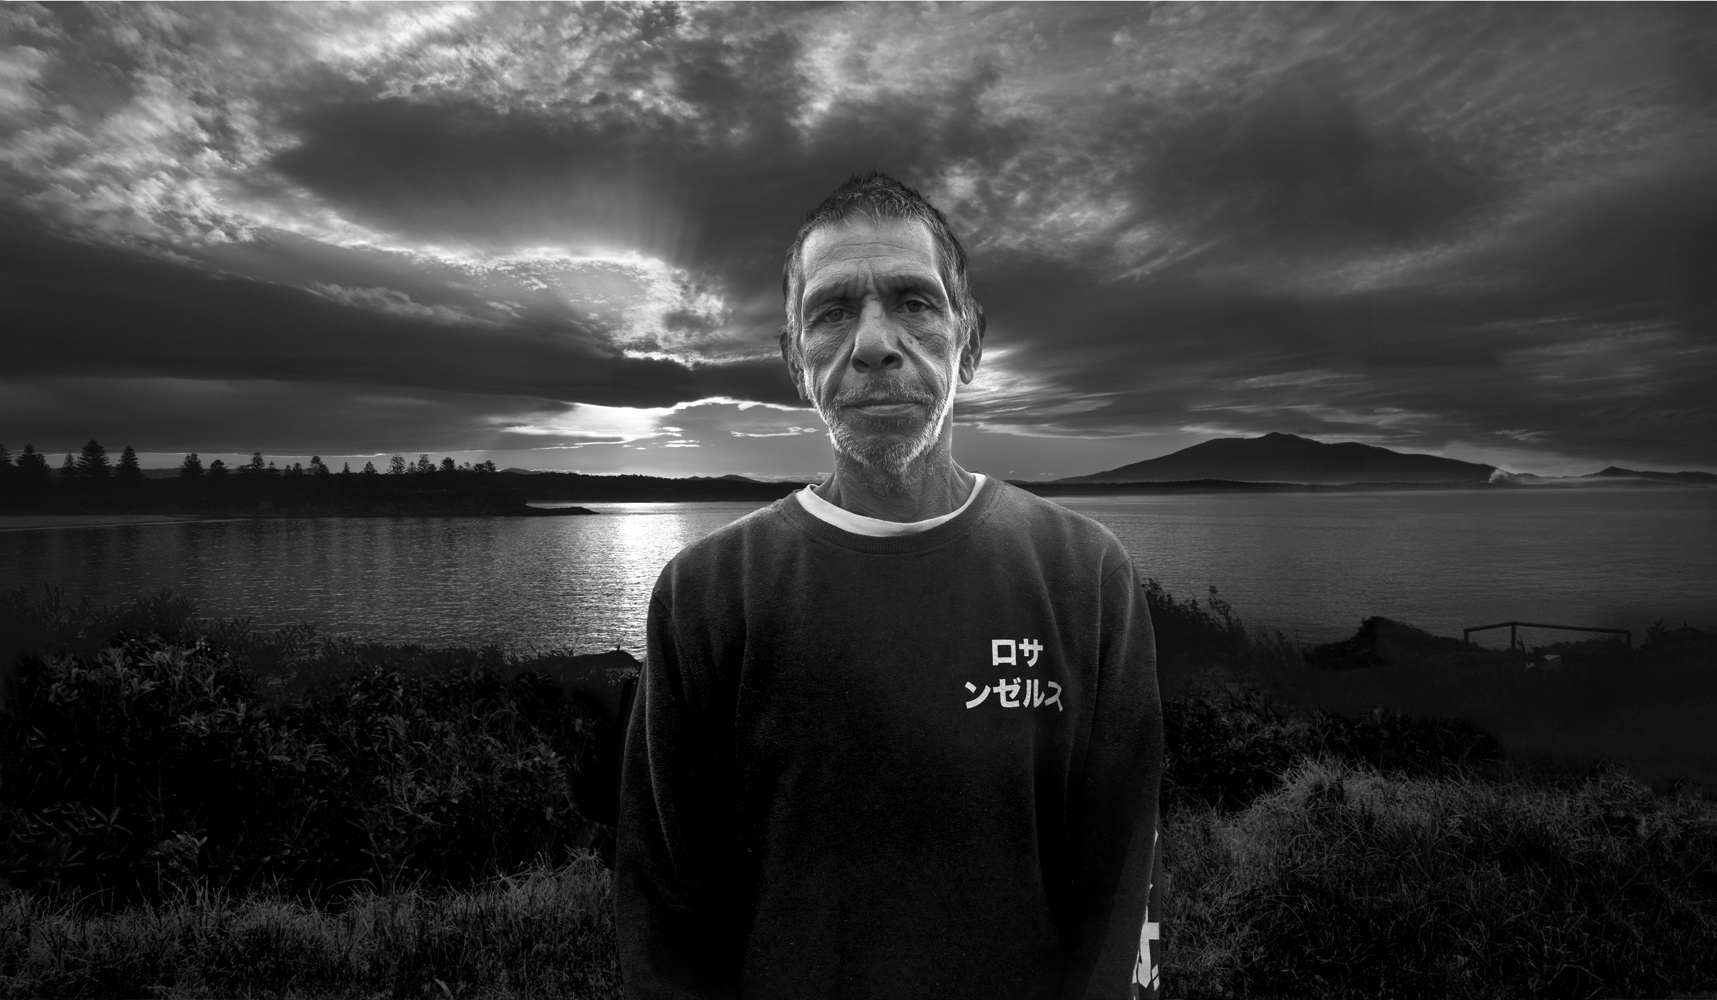 Portrait of Bermagui Aboriginal elder in prestigious photography award